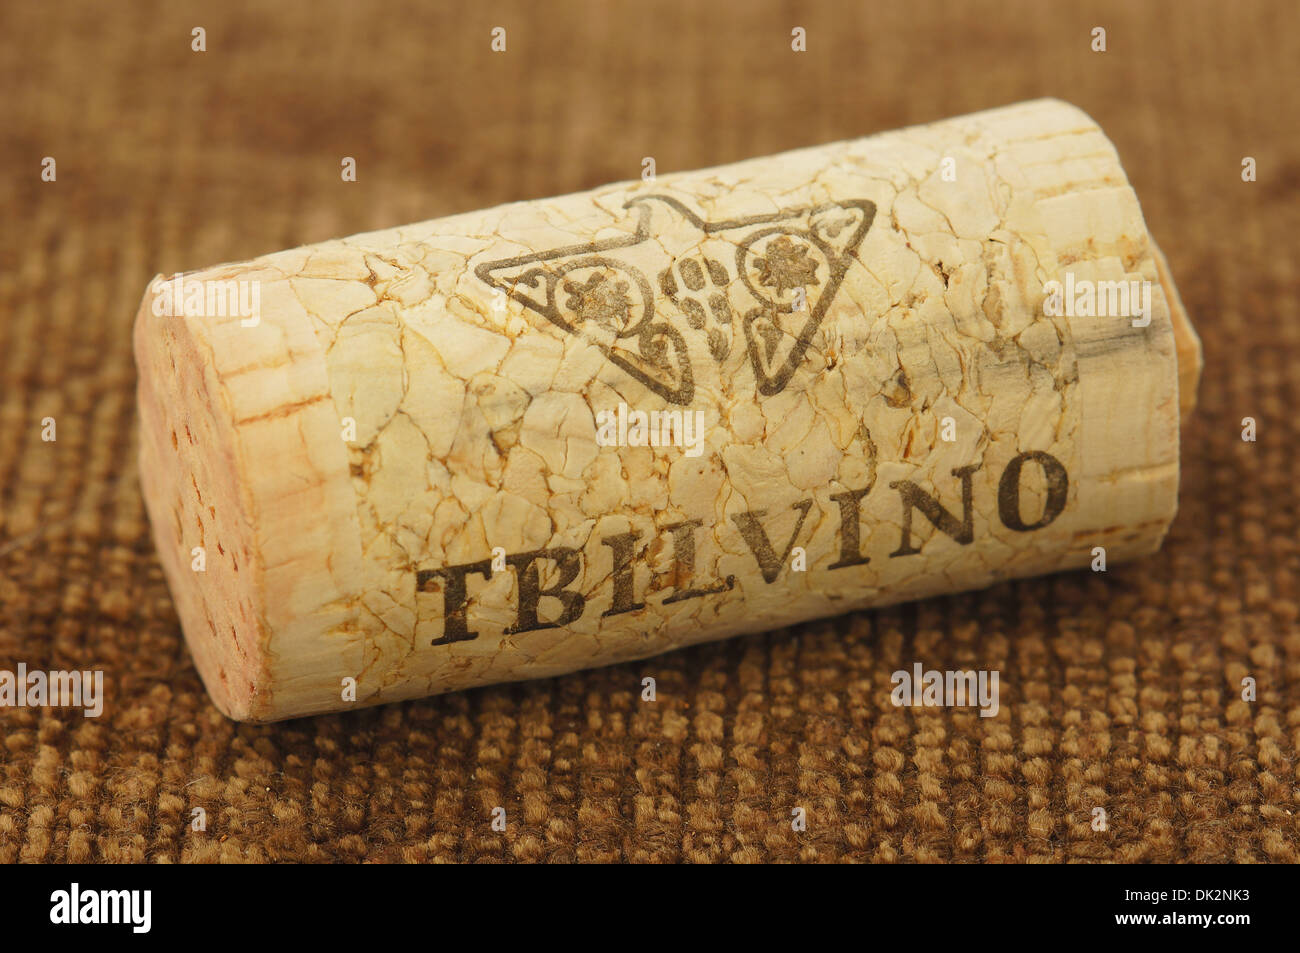 Tbilvino winemaker georgian wine cork stopper Stock Photo